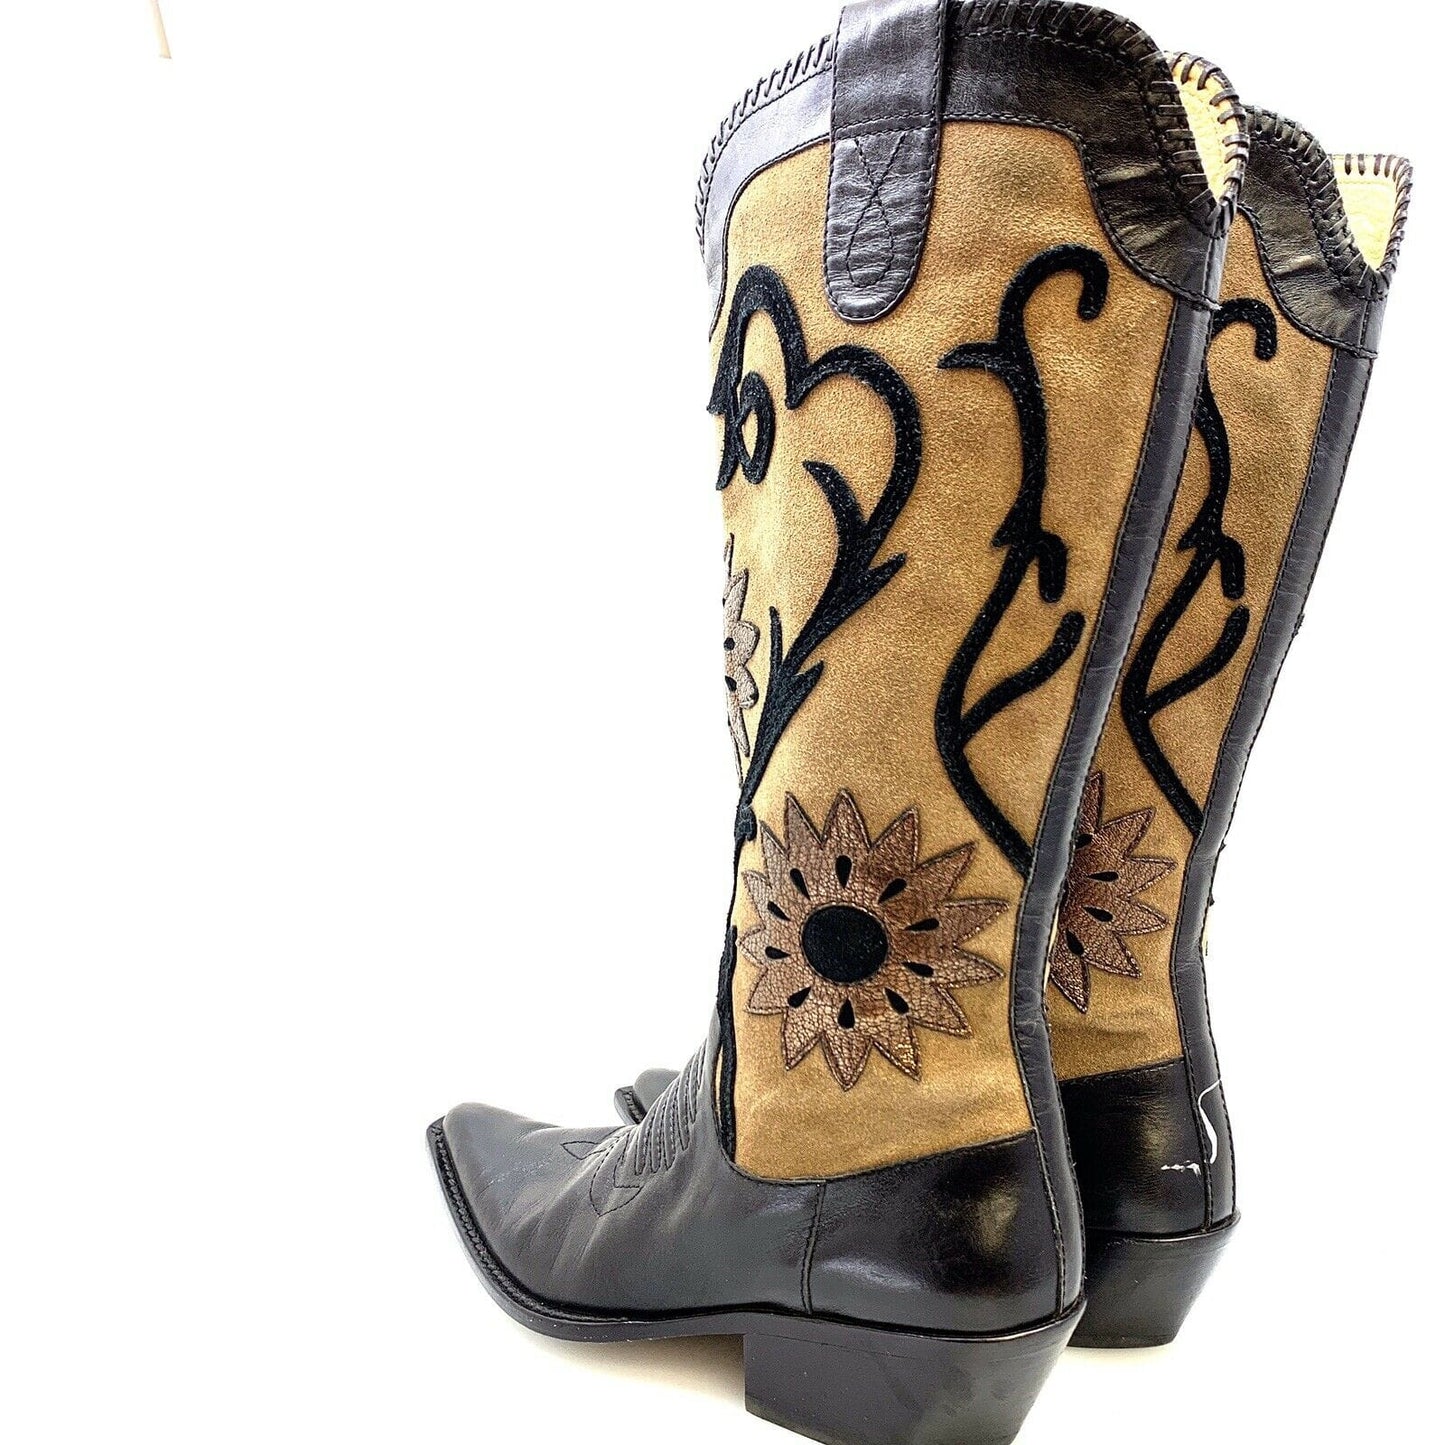 Paolo Womens Western Fashion Boots, Black / Brown - Size 4M - parsimonyshoppes